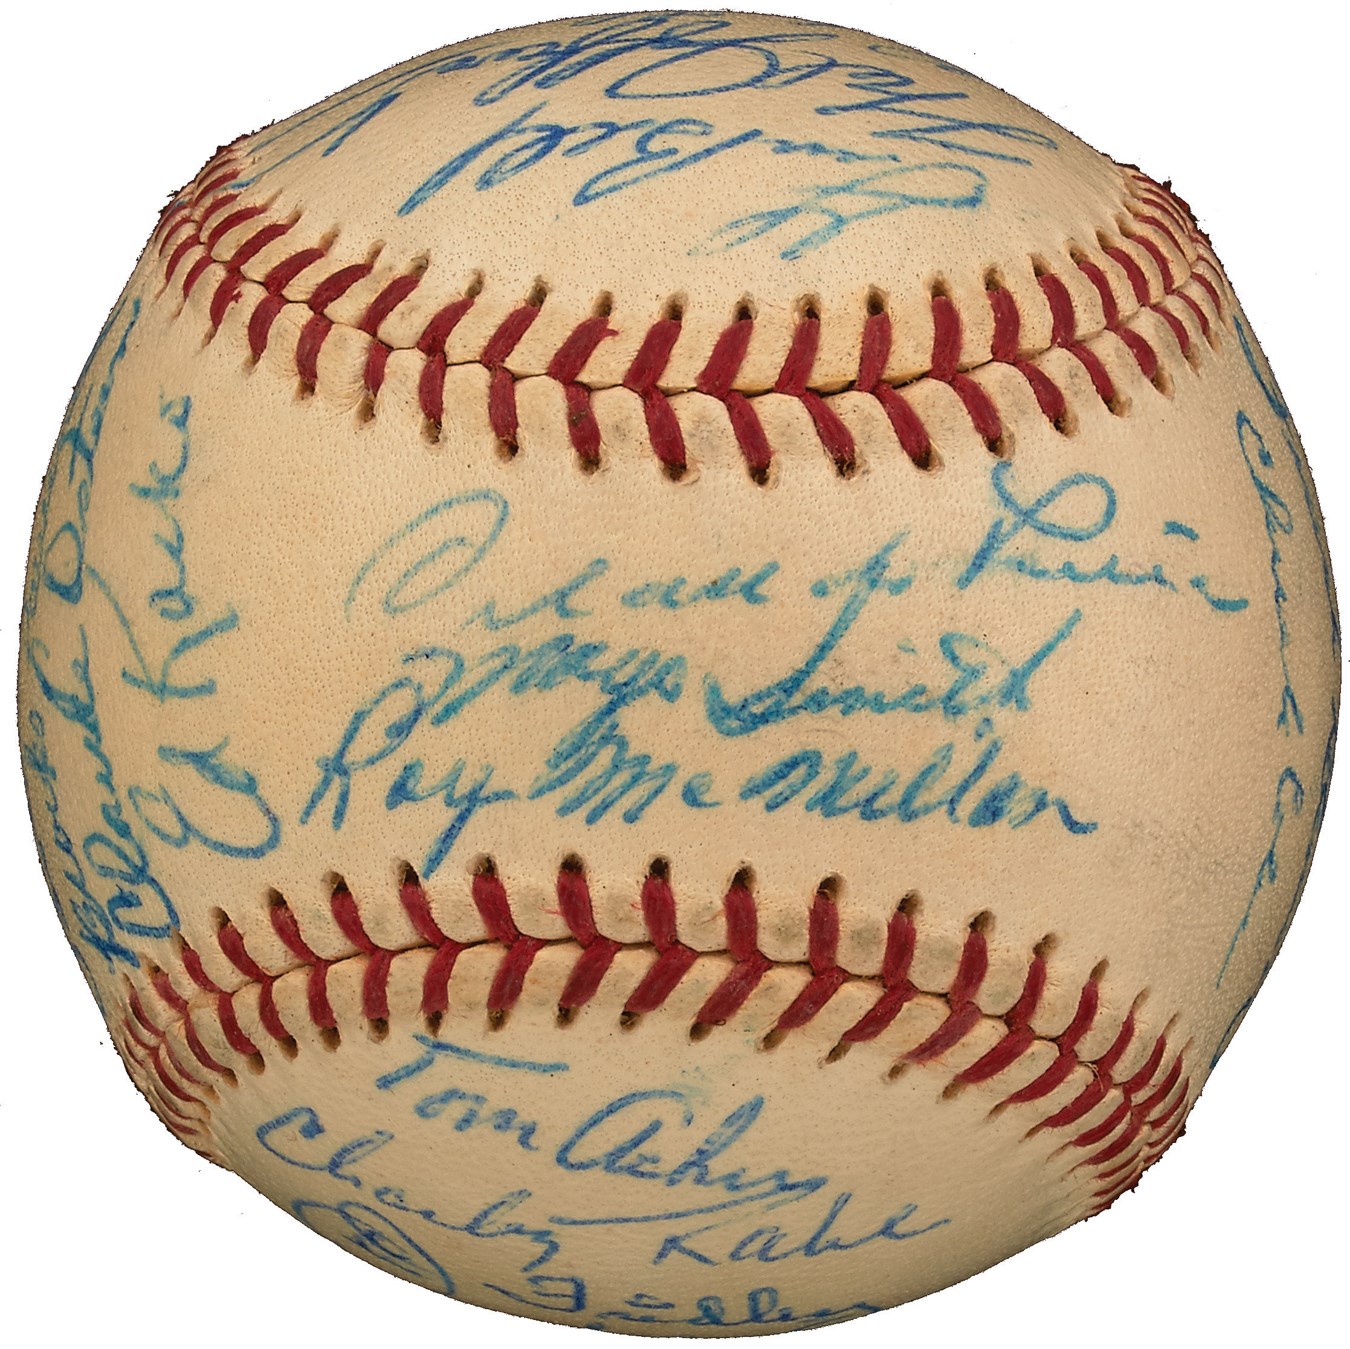 Pete Rose & Cincinnati Reds - High Grade 1958-59 Cincinnati Reds Team-Signed Baseball (PSA)